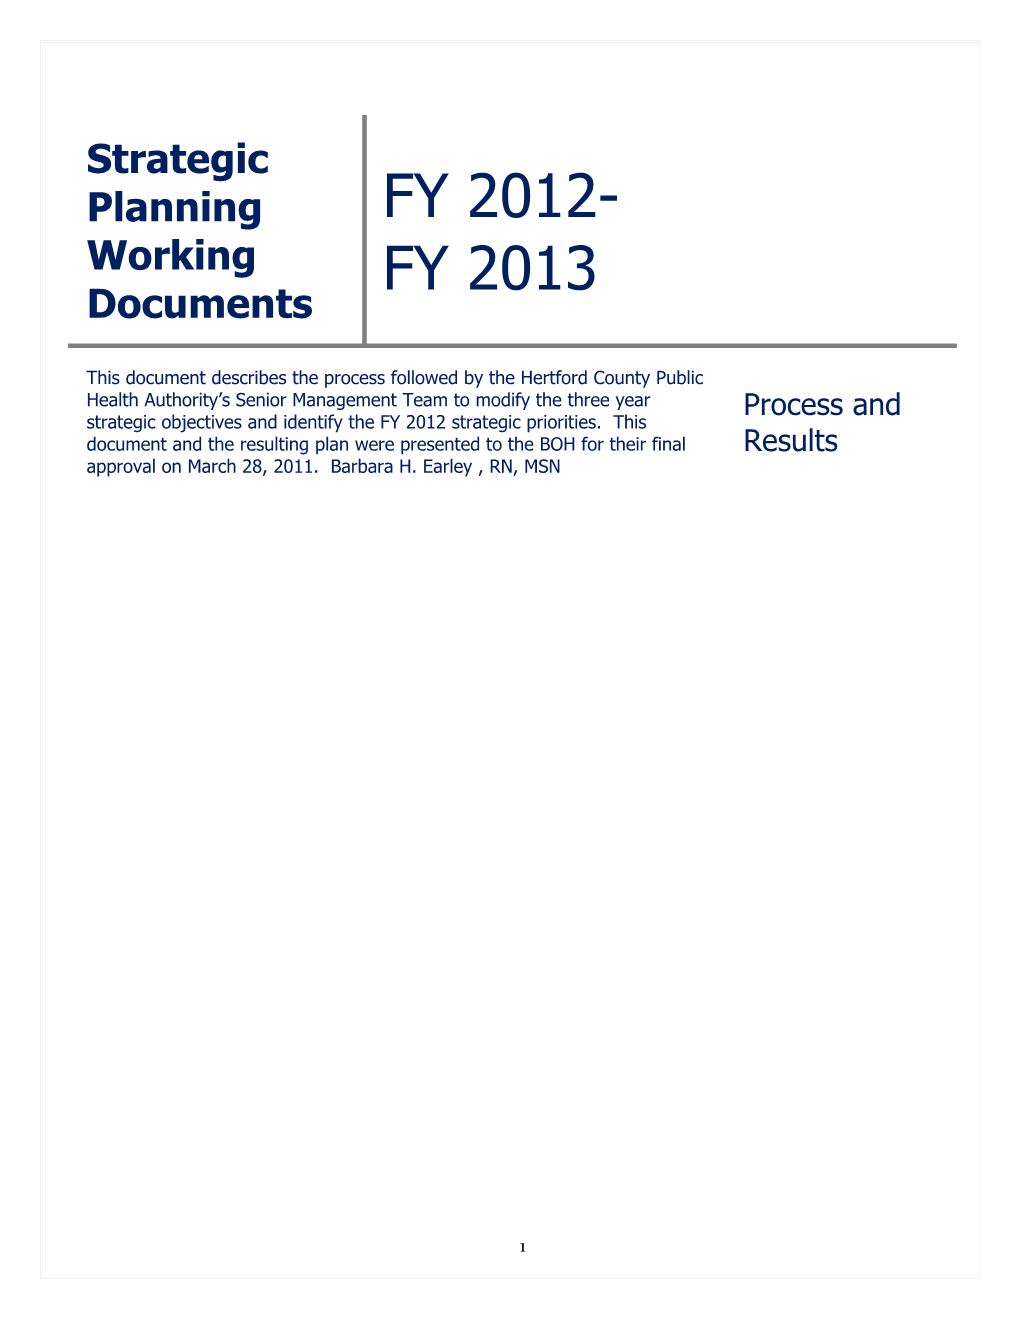 Strategic Planning Working Documents